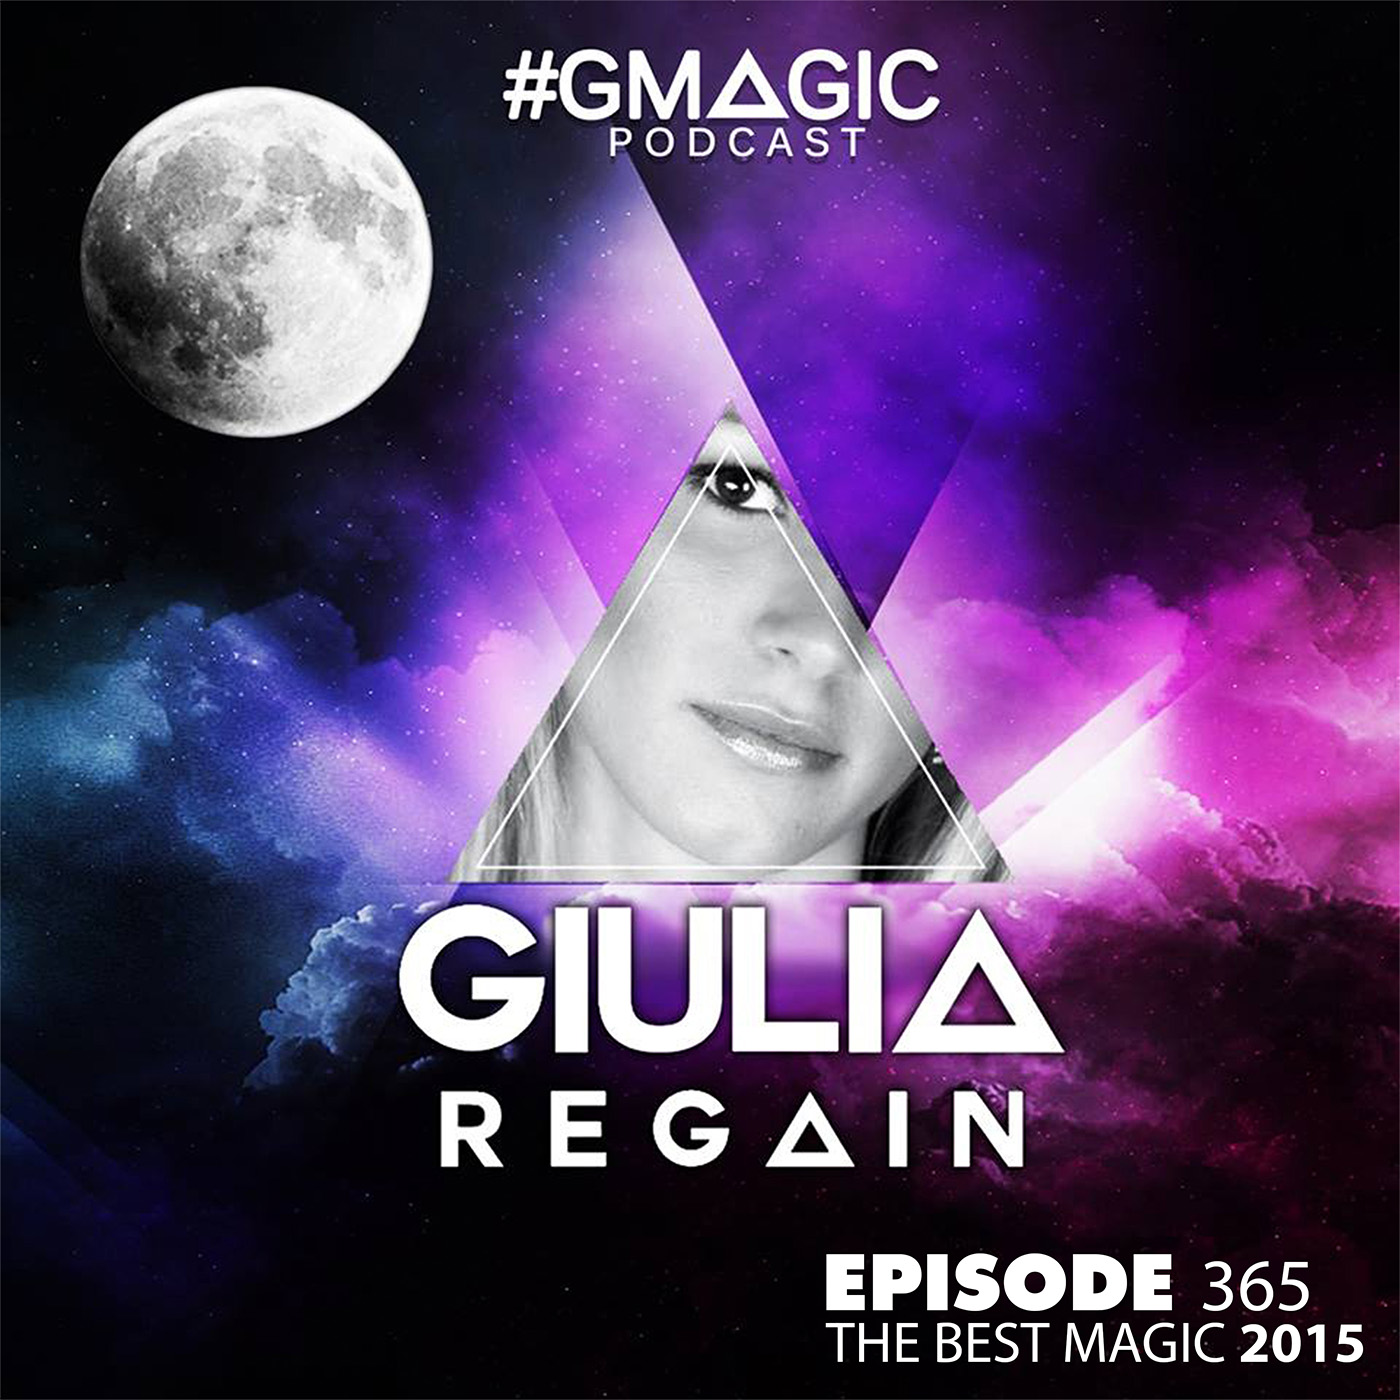 #Gmagic Podcast 365 - The Best Magic 2015